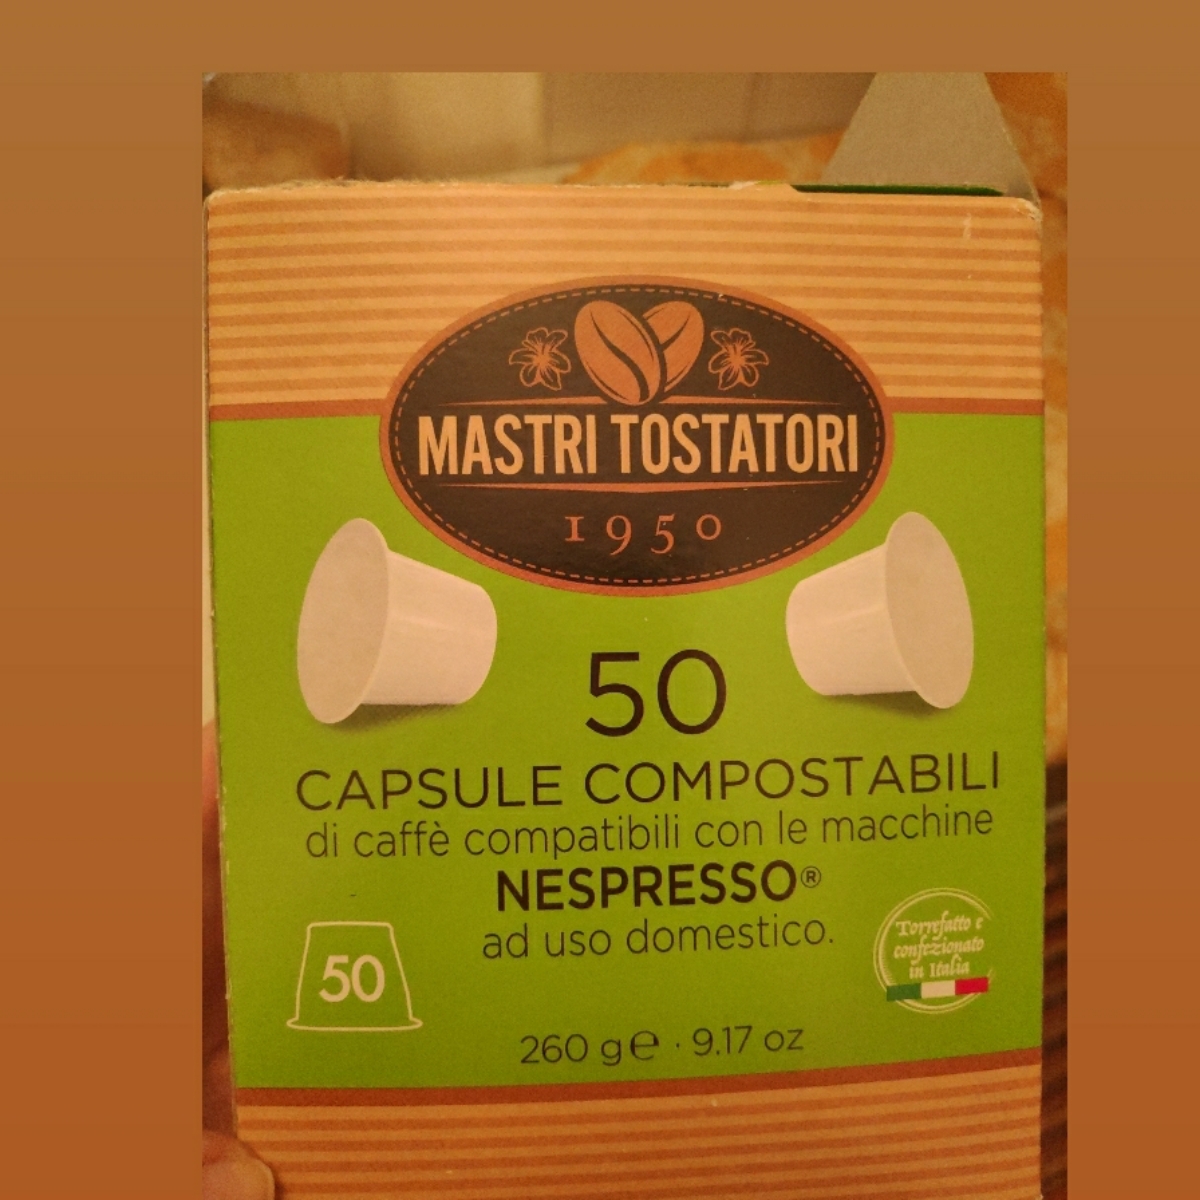 Mastri tostatori Capsule caffè compostabili Reviews | abillion